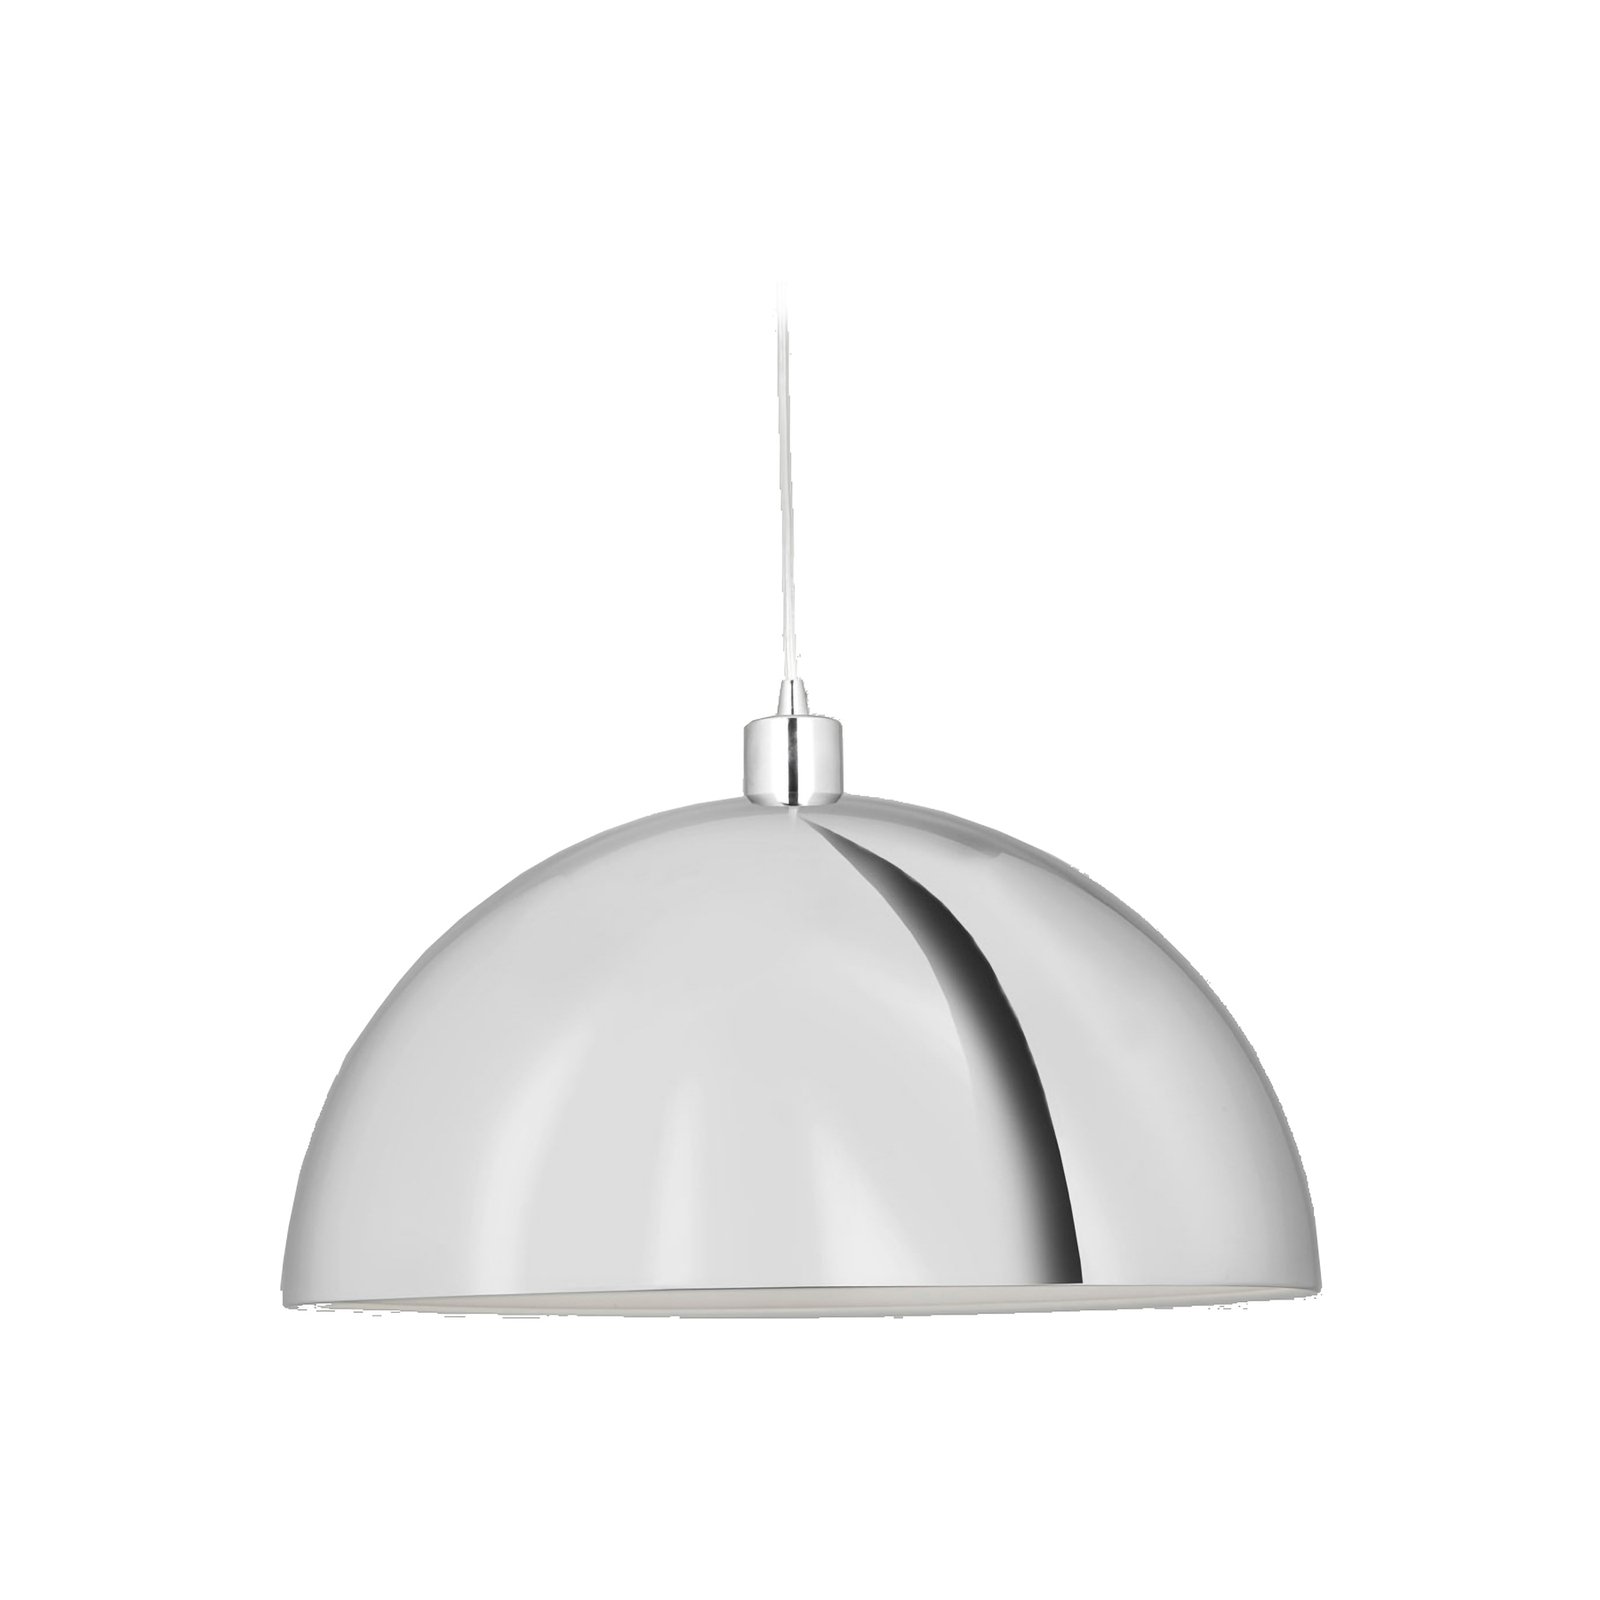 Aluminor Dome pendant light, Ø 50 cm, chrome